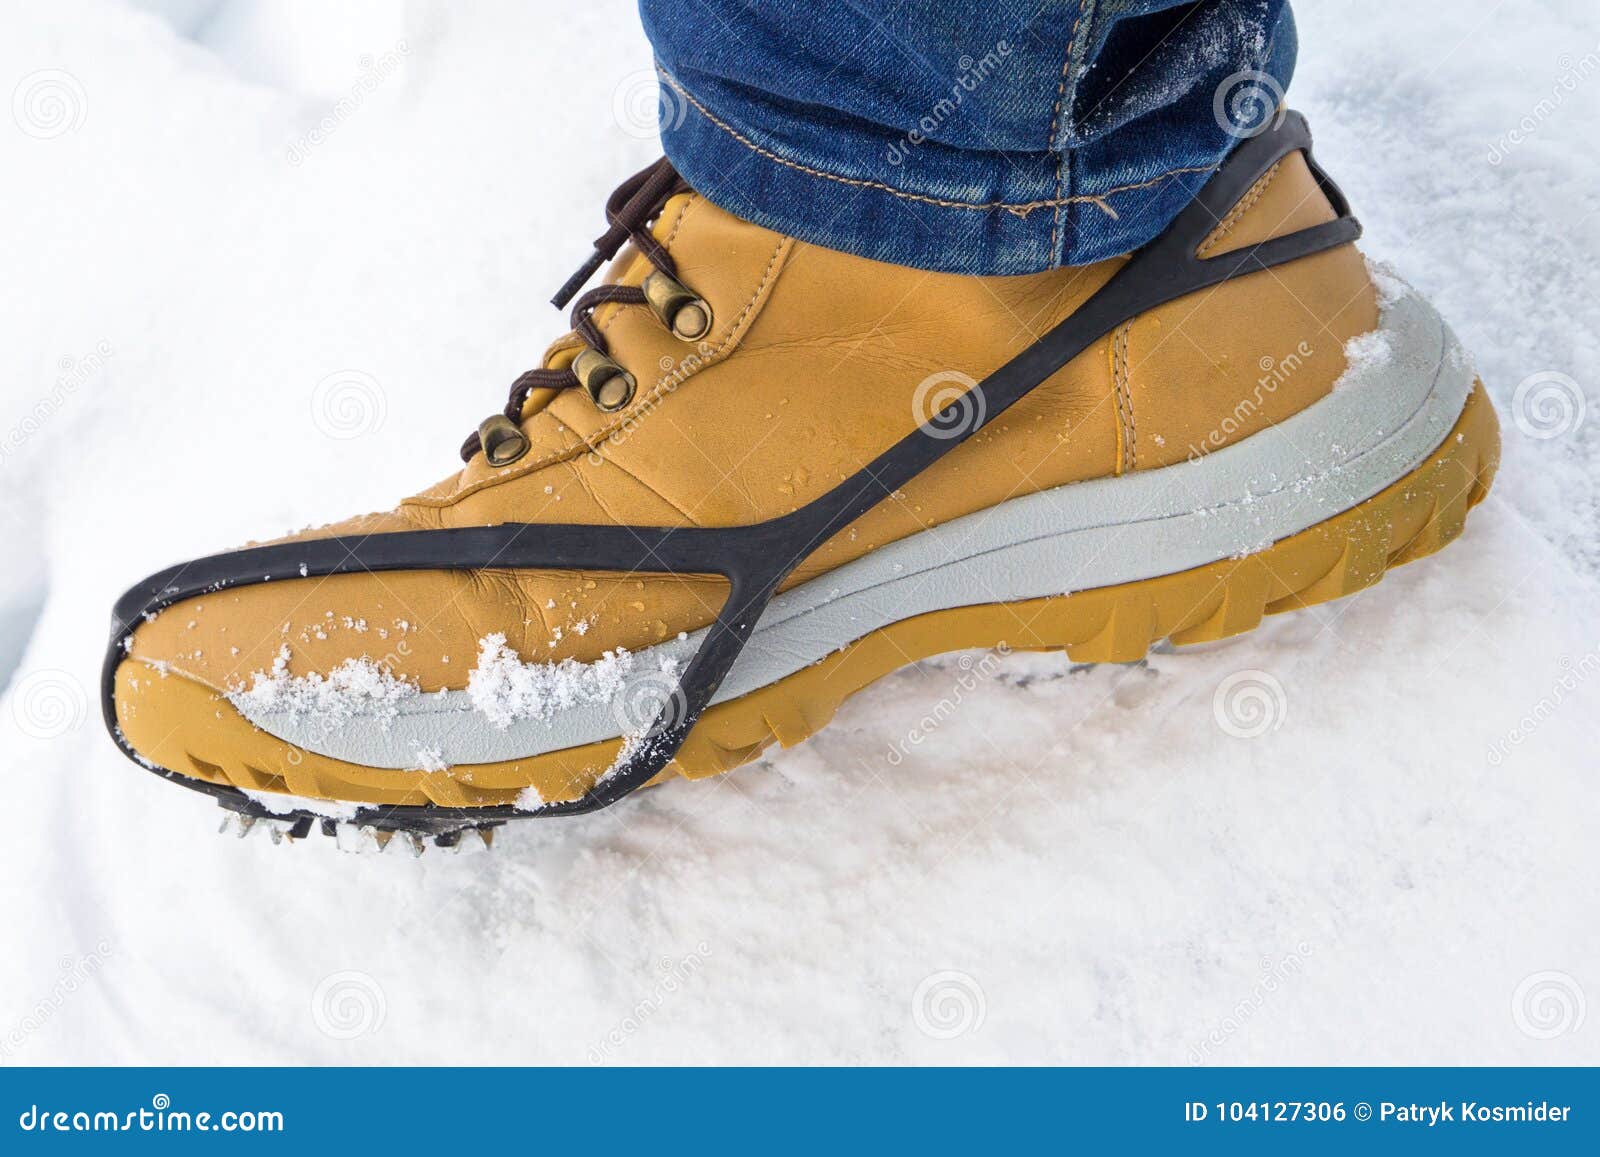 winter shoe spikes